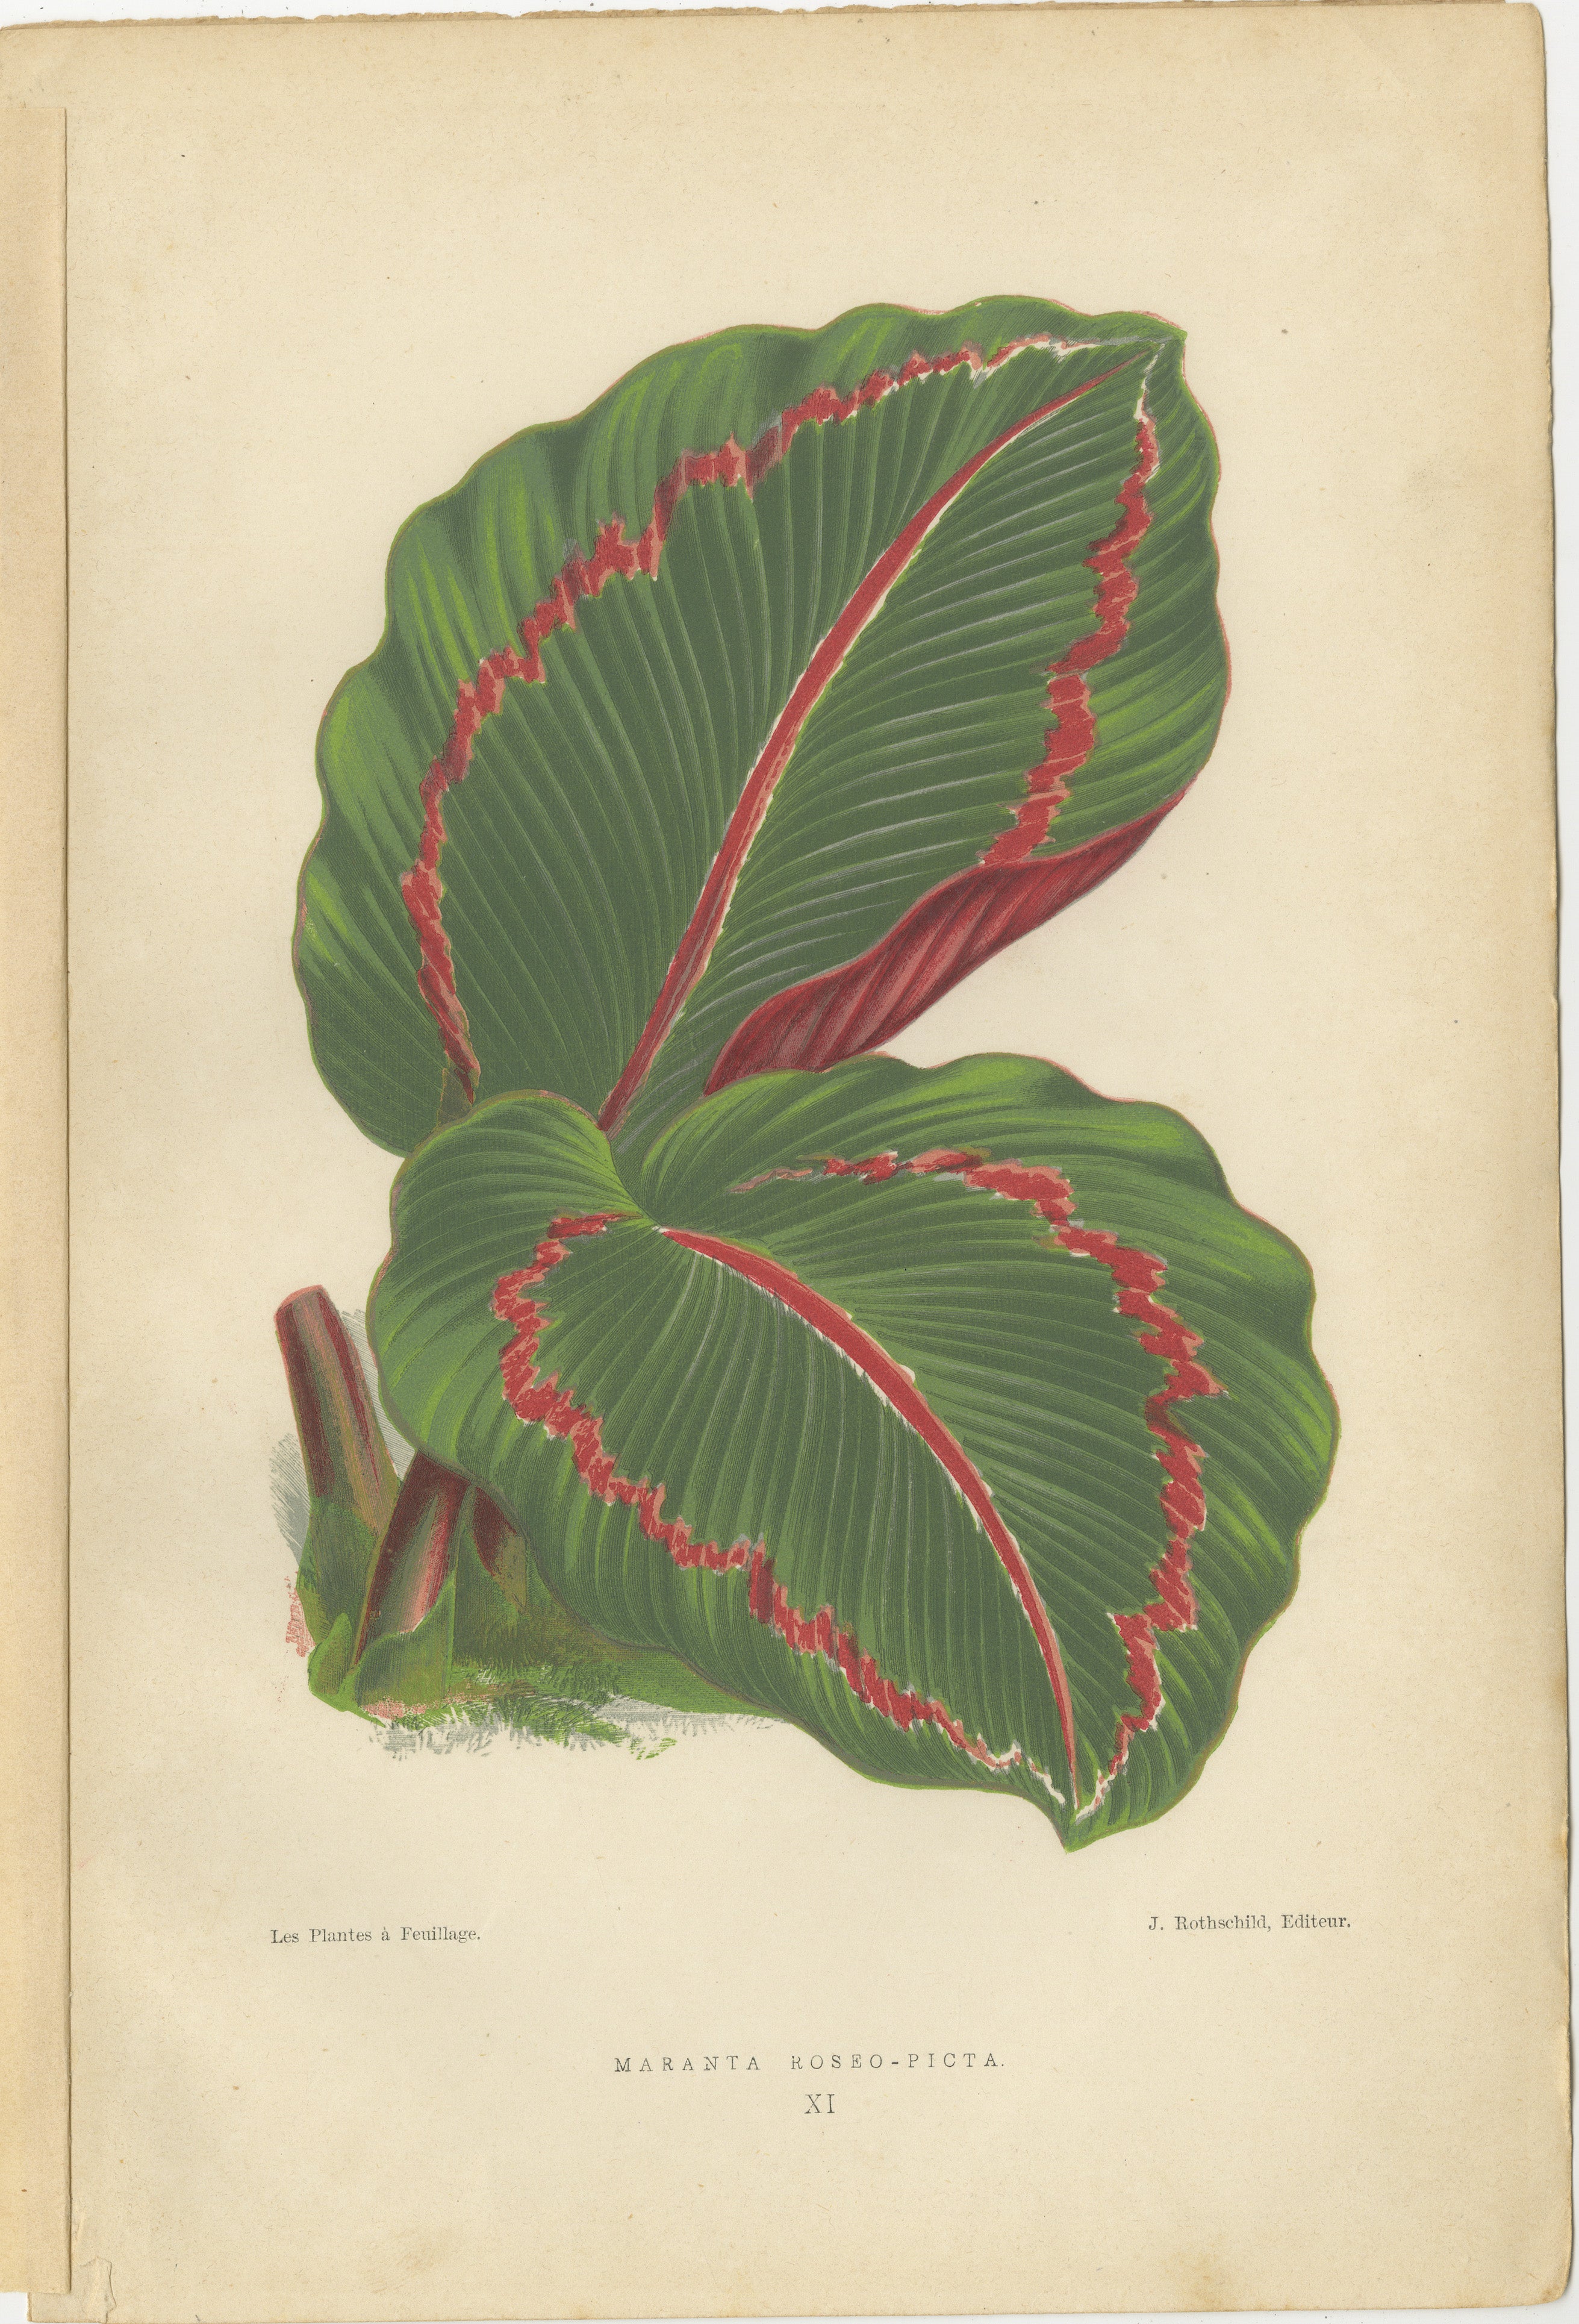 Decorative original antique botanical illustrations from 